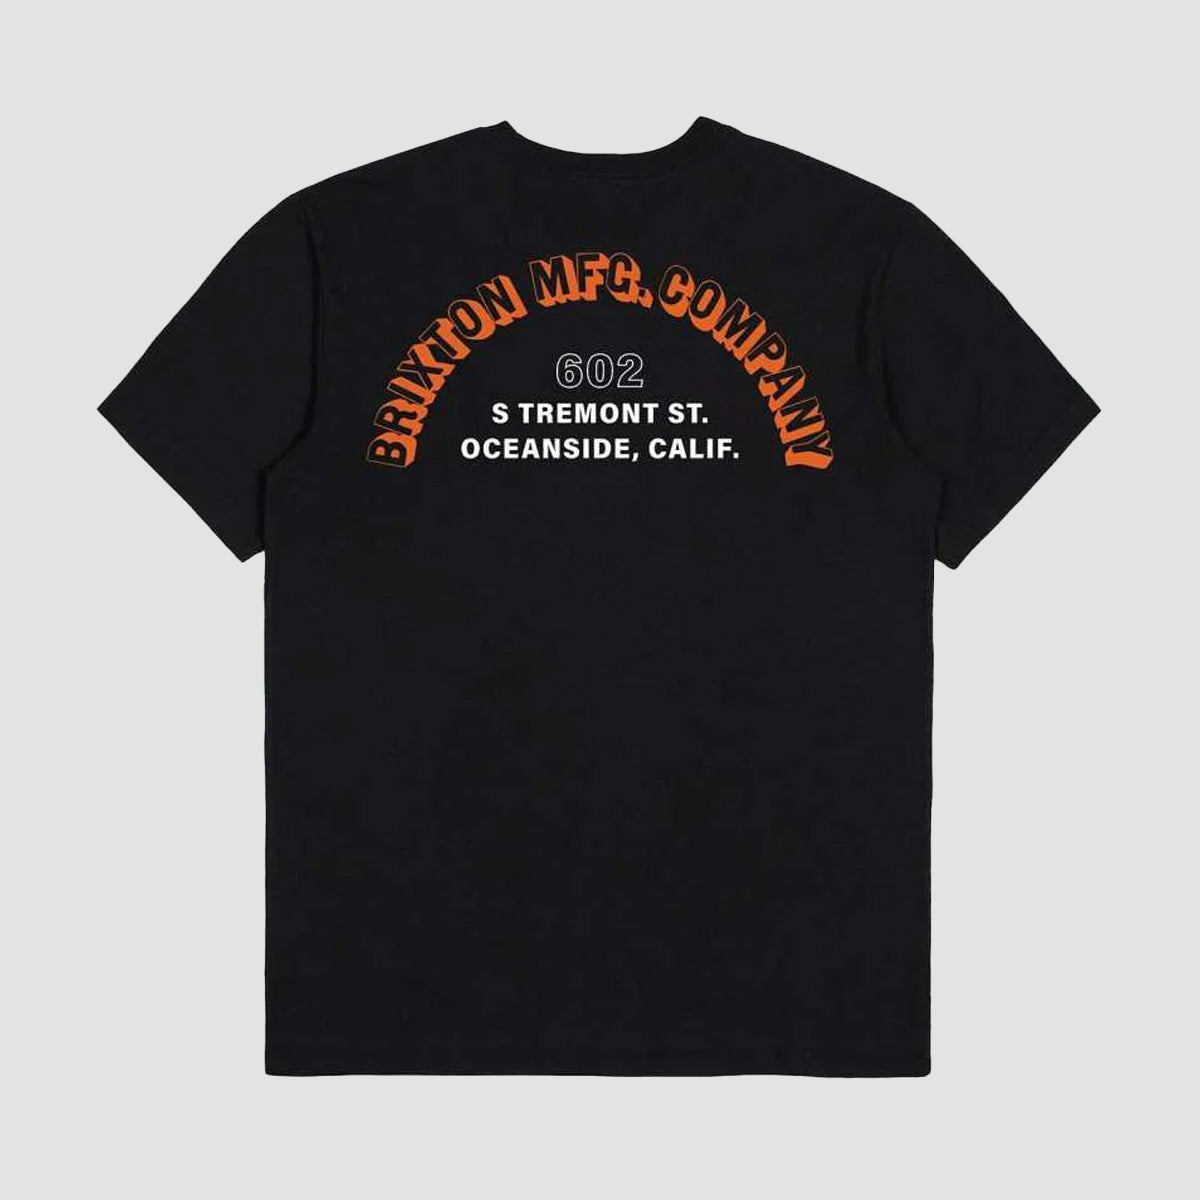 Brixton Haven Tailored Pocket T-Shirt Black